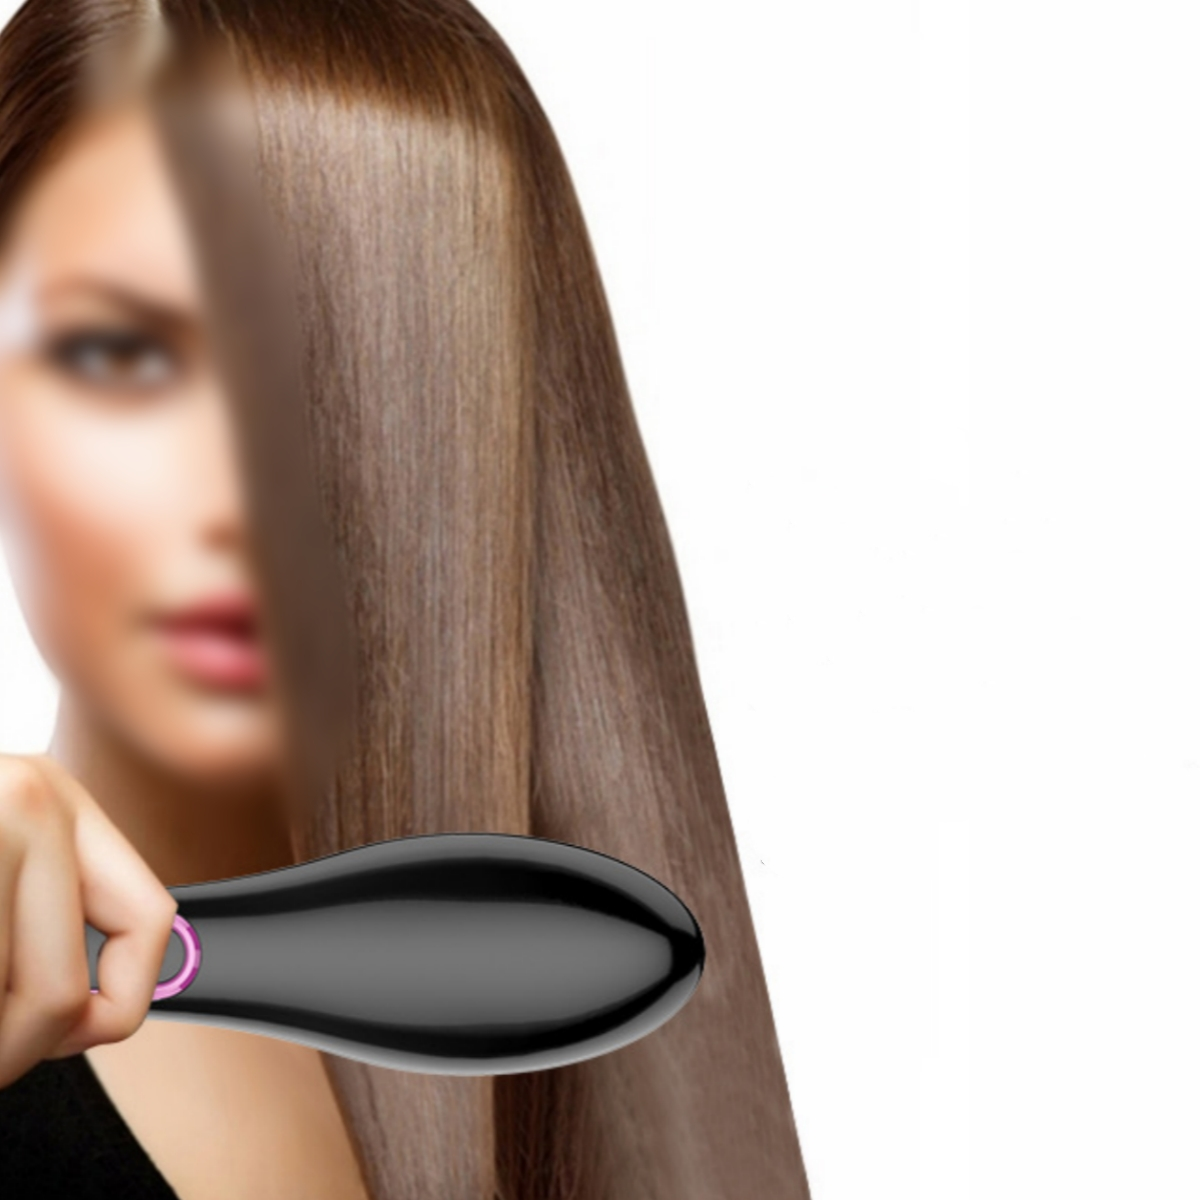 Negative das Haarglättungskamm, Elektrischer Haarglätter LCD-Display Nicht, Lonen SYNTEK Schädigen Haar